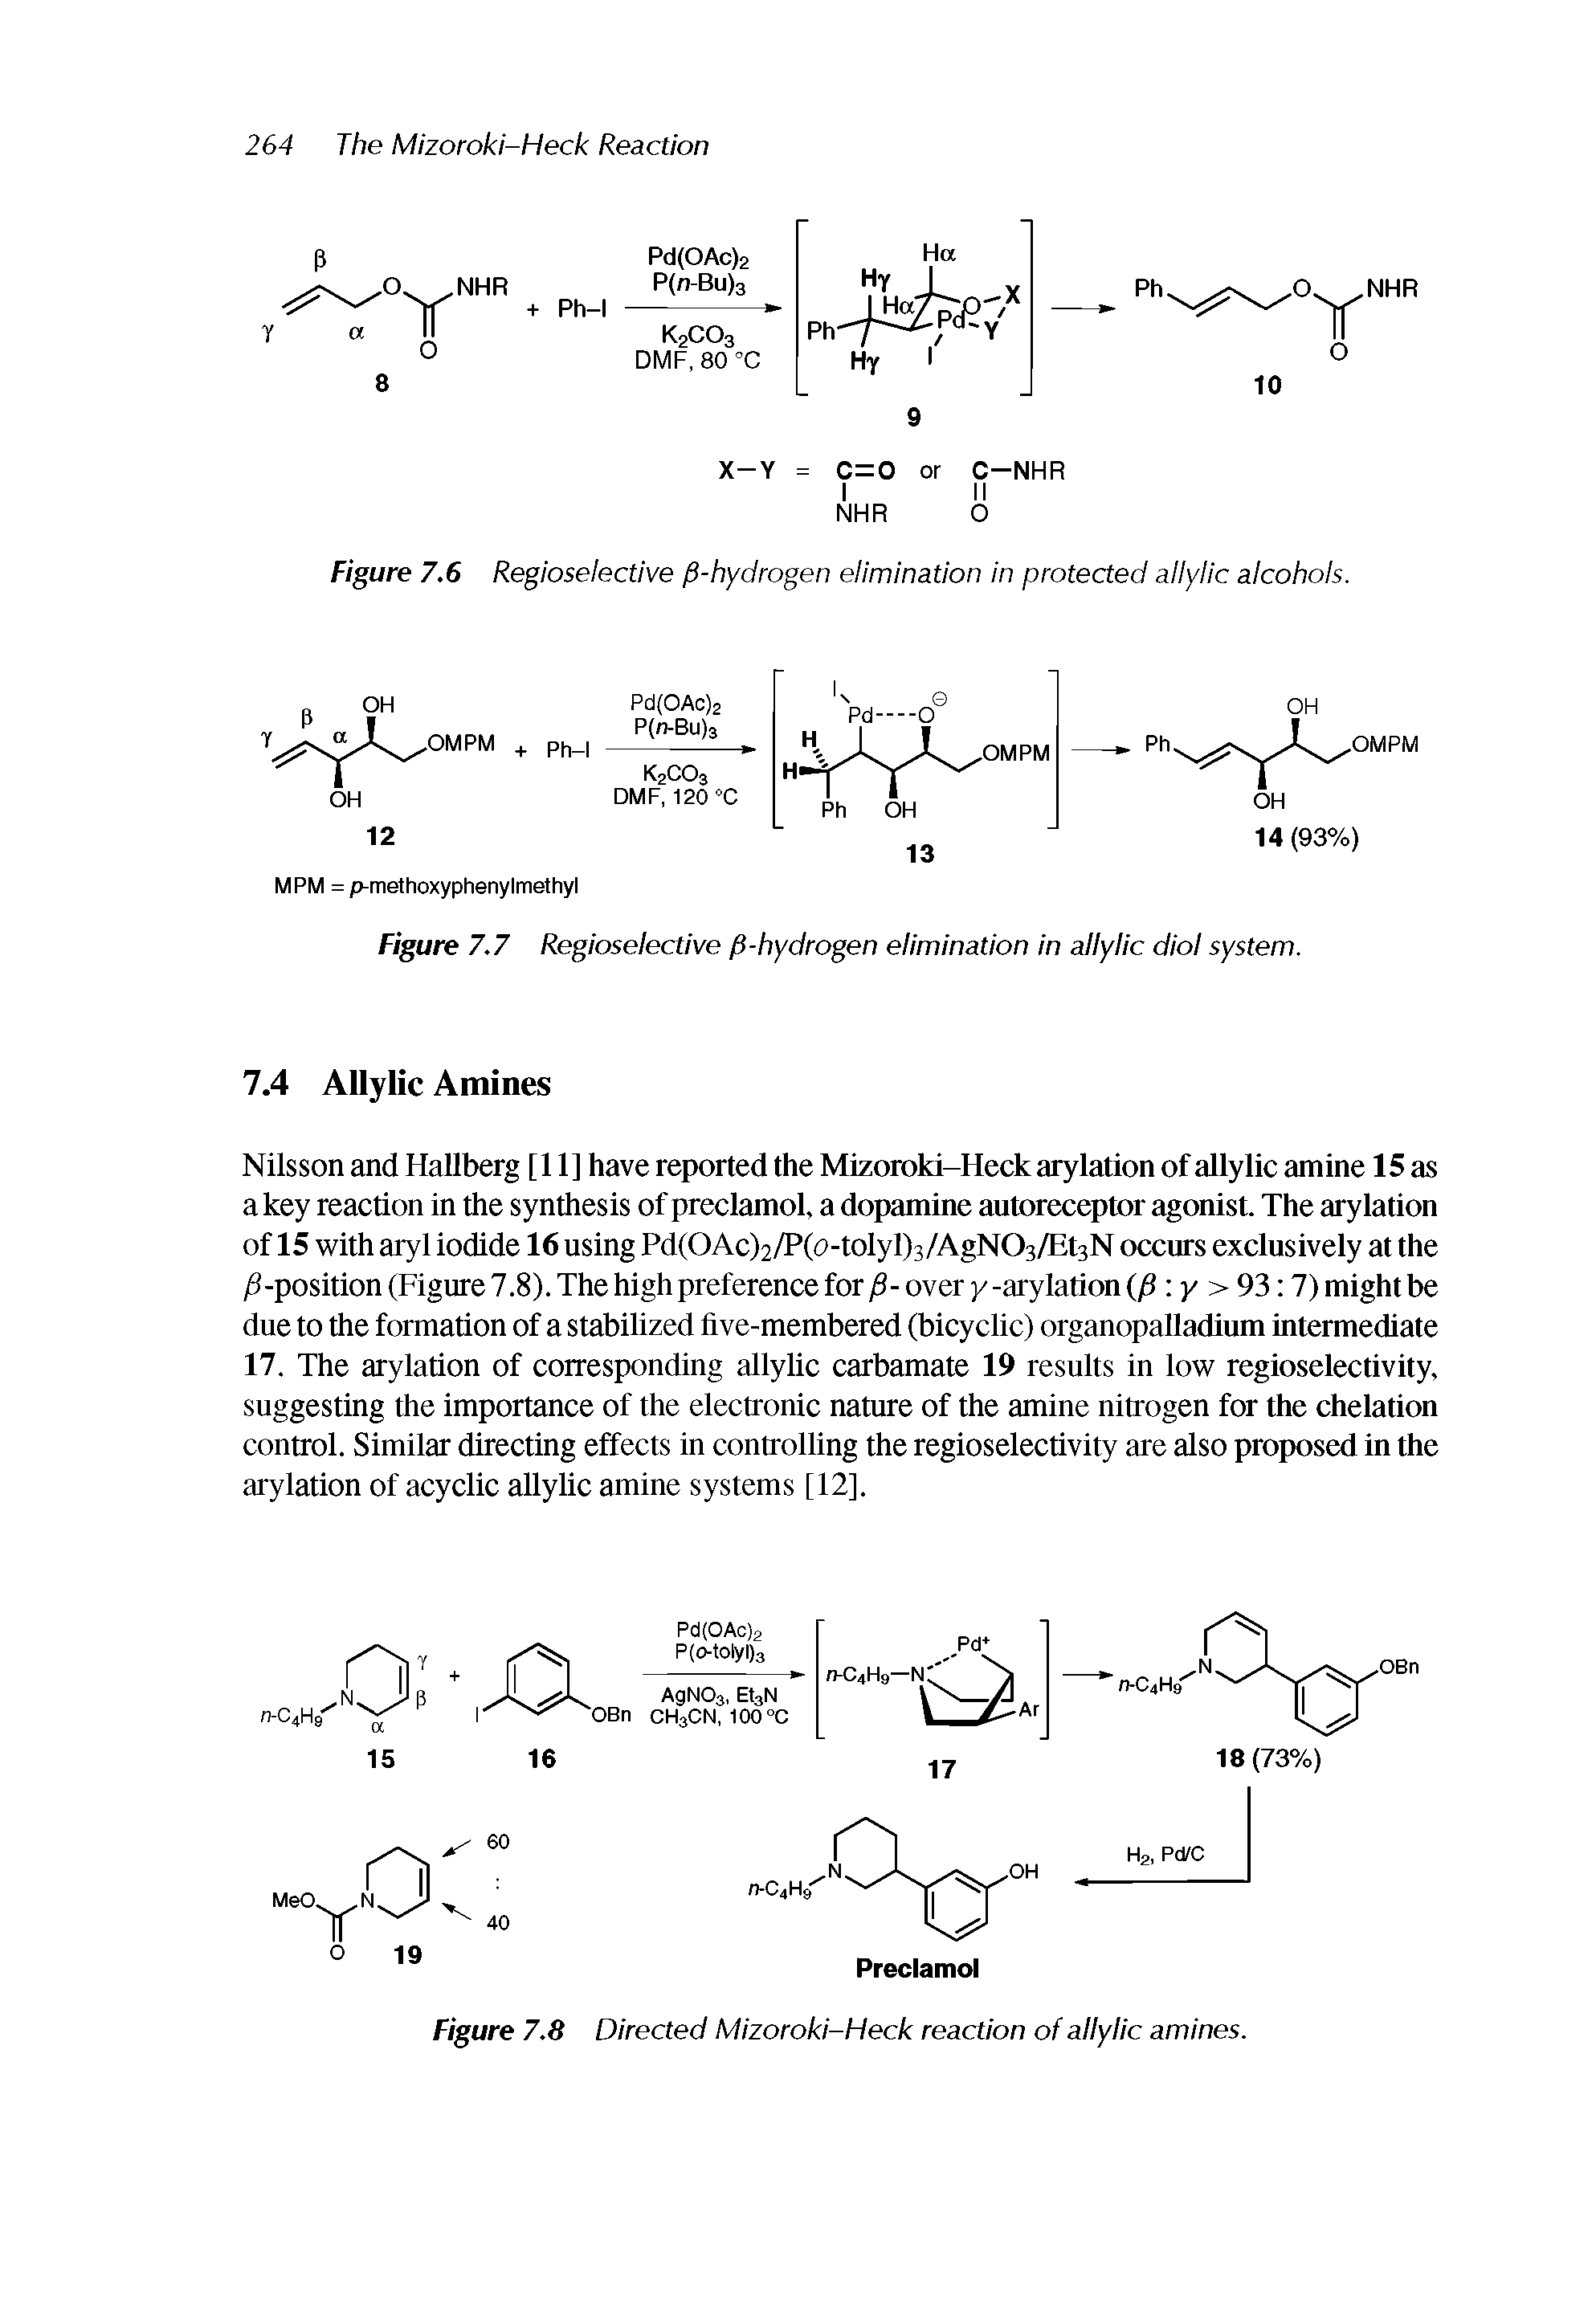 Figure 7.8 Directed Mizoroki-Heck reaction of allylic amines.